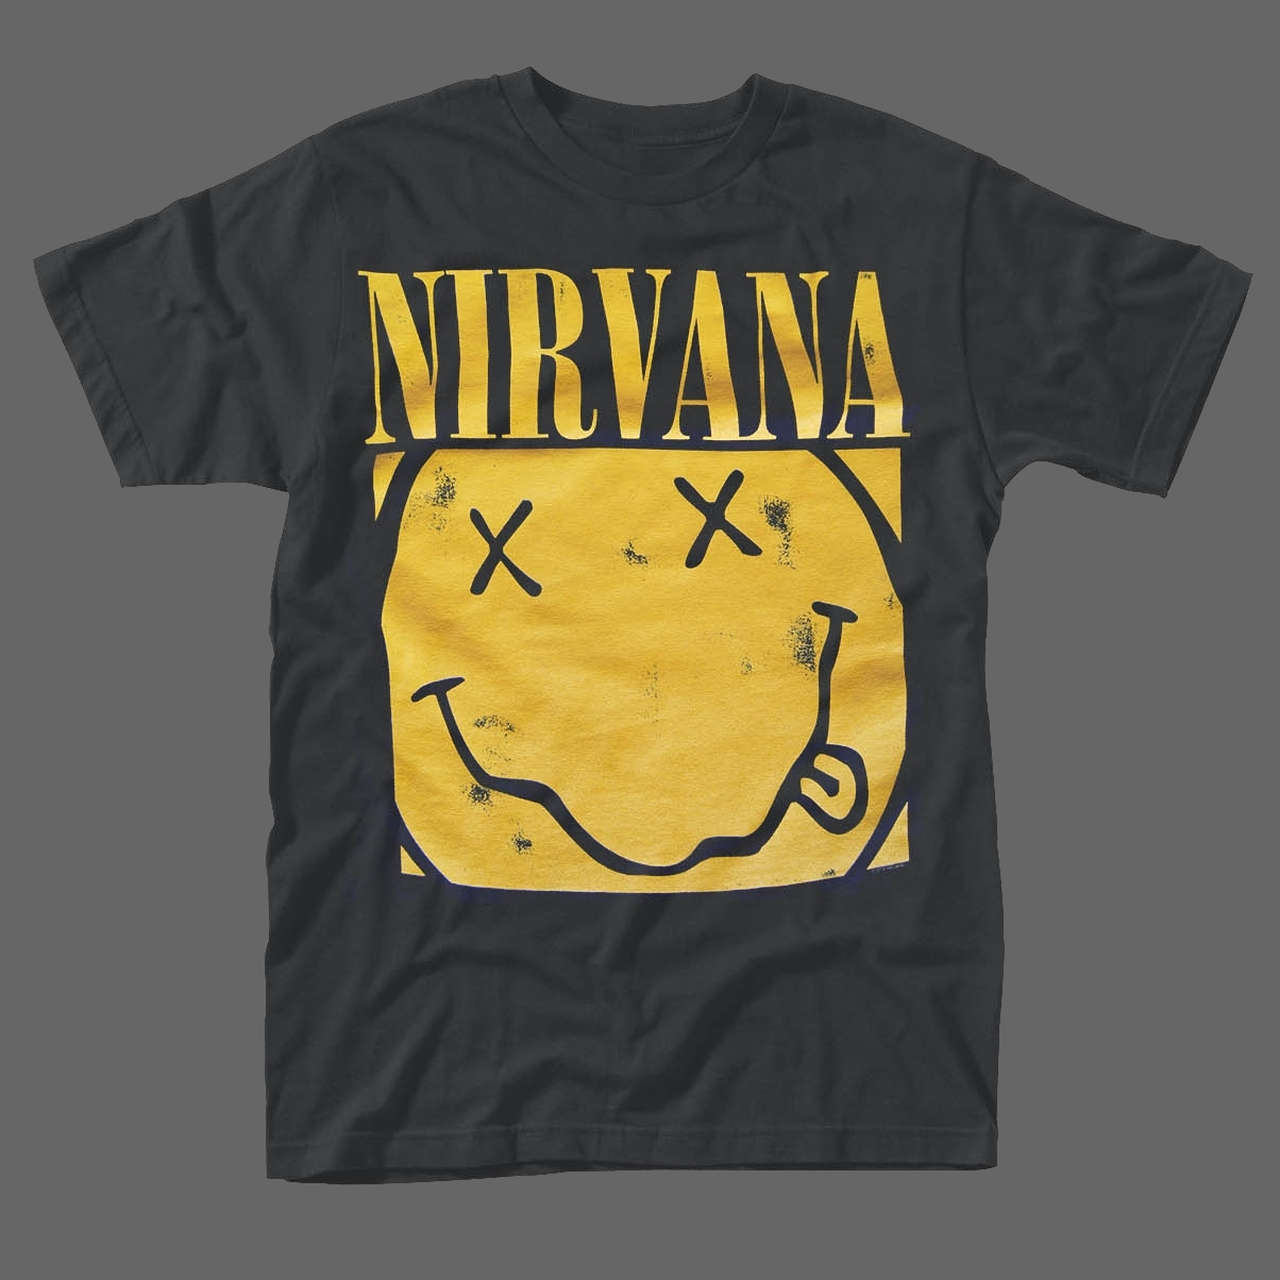 Nirvana - Box Smiley (T-Shirt)